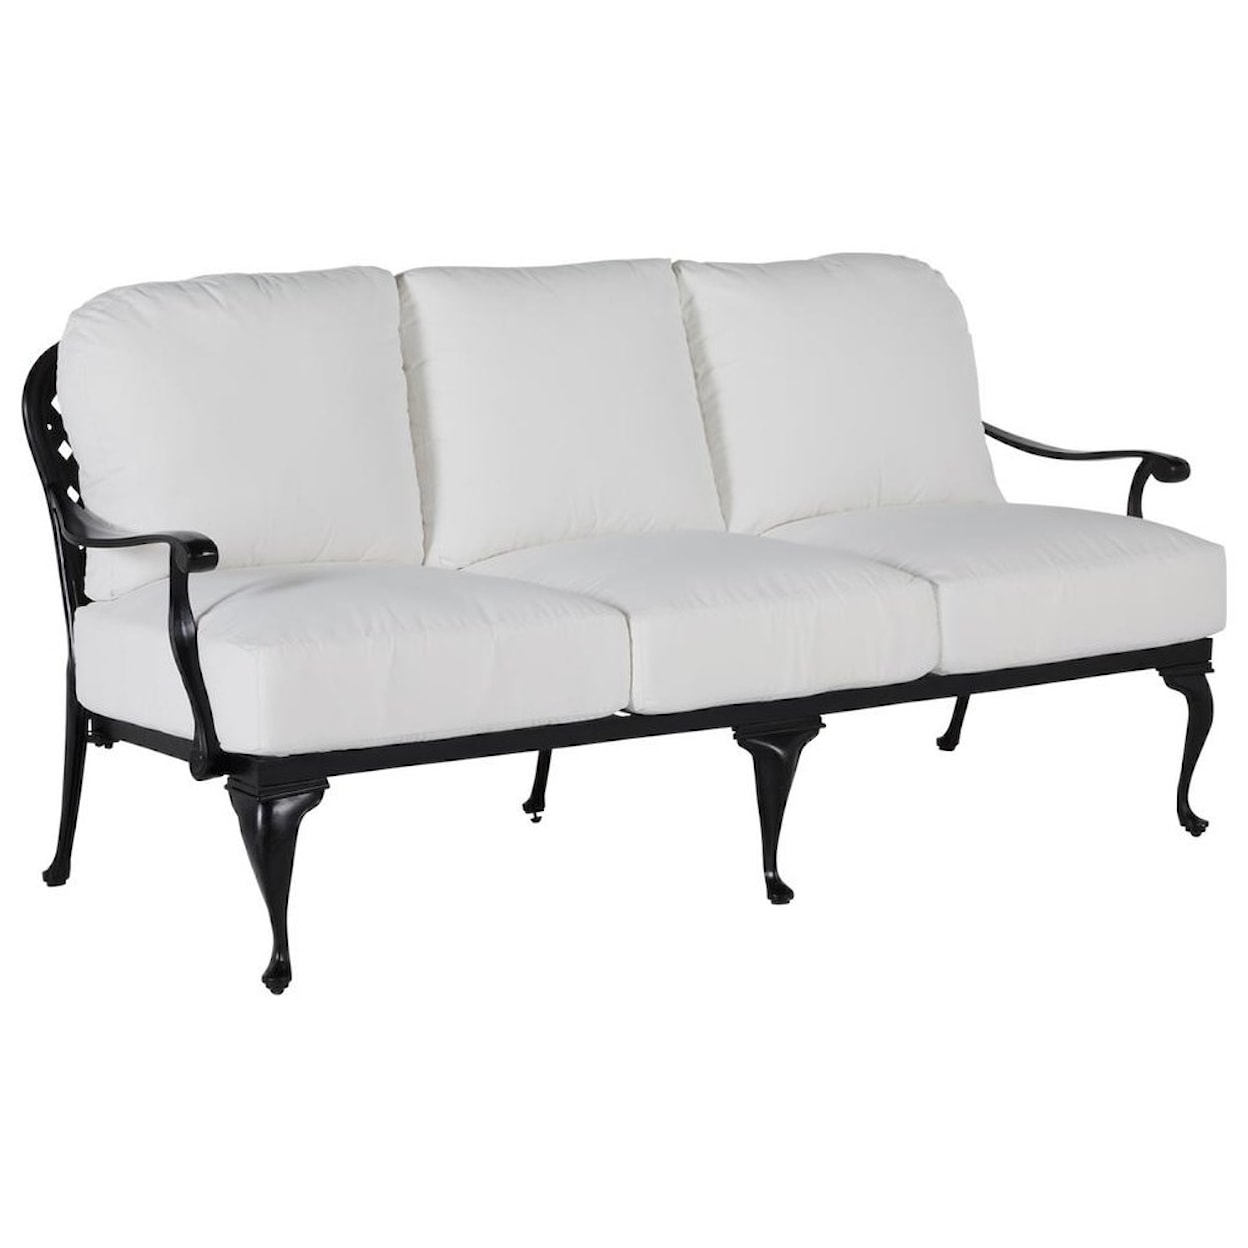 Summer Classics Provance Provance Aluminum Sofa